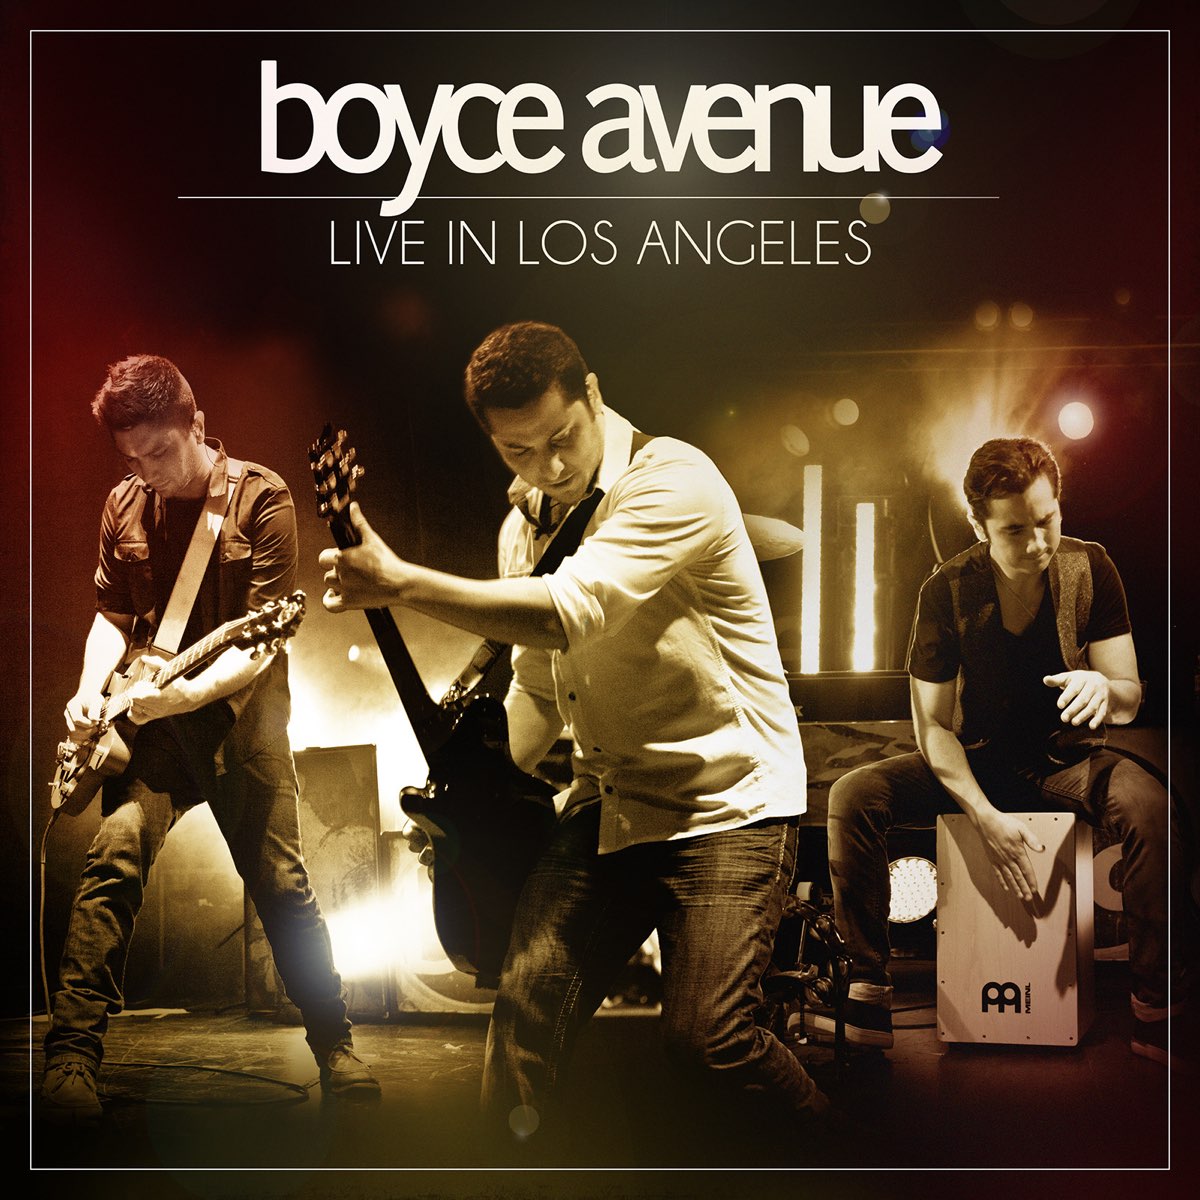 Live in Los Angeles - Album by Boyce Avenue - Apple Music